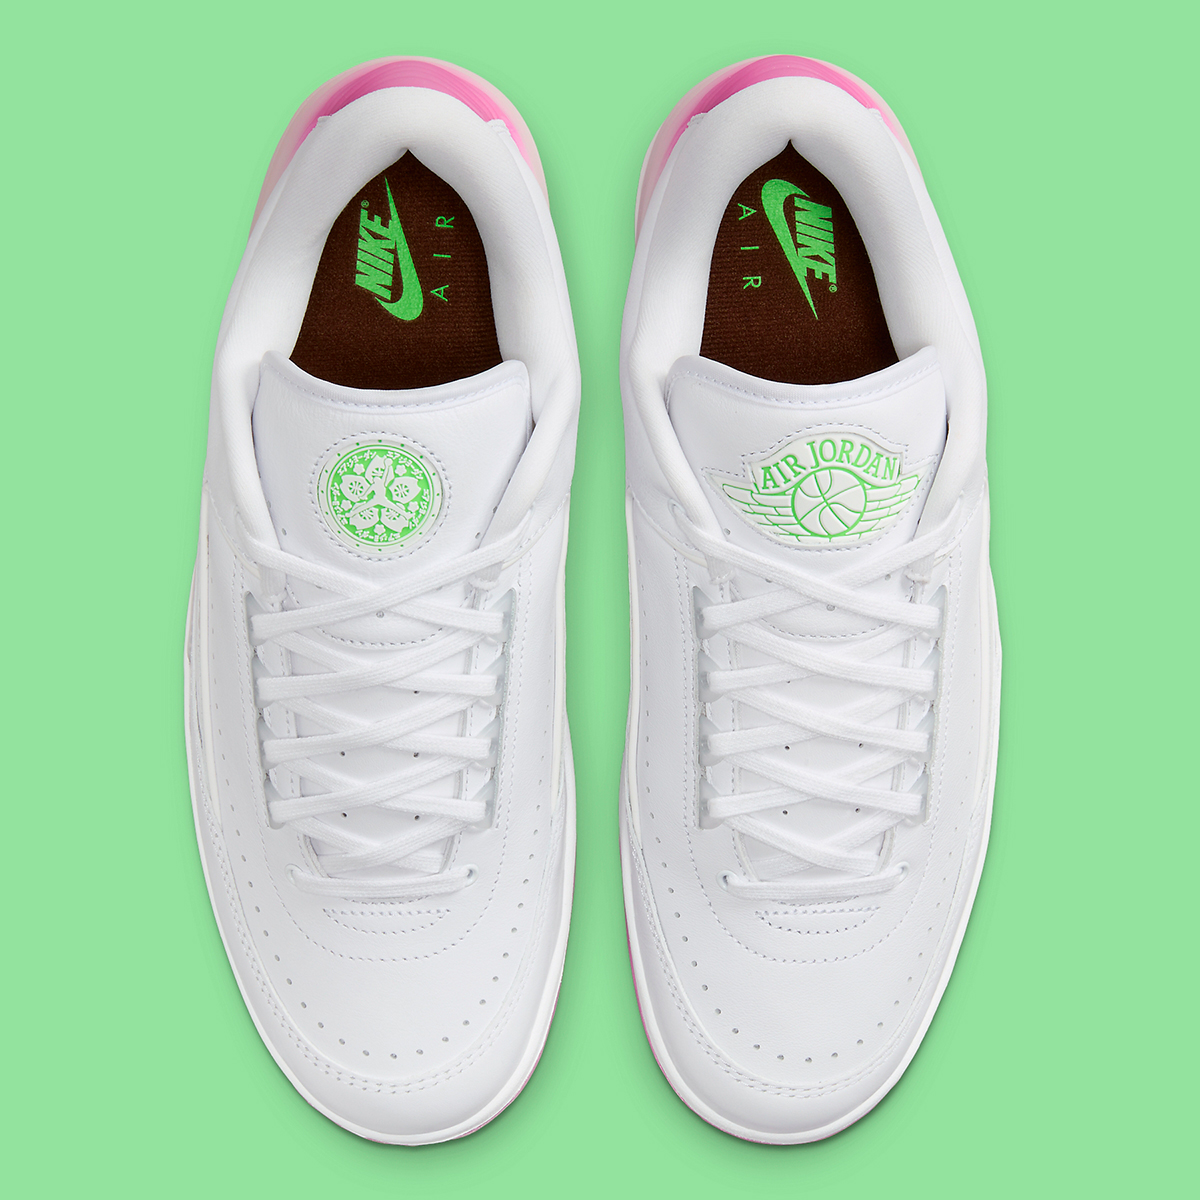 Air Jordan 11 CMFT Low-sko til større børn hvid Cherry Blossom Fq3228 100 4